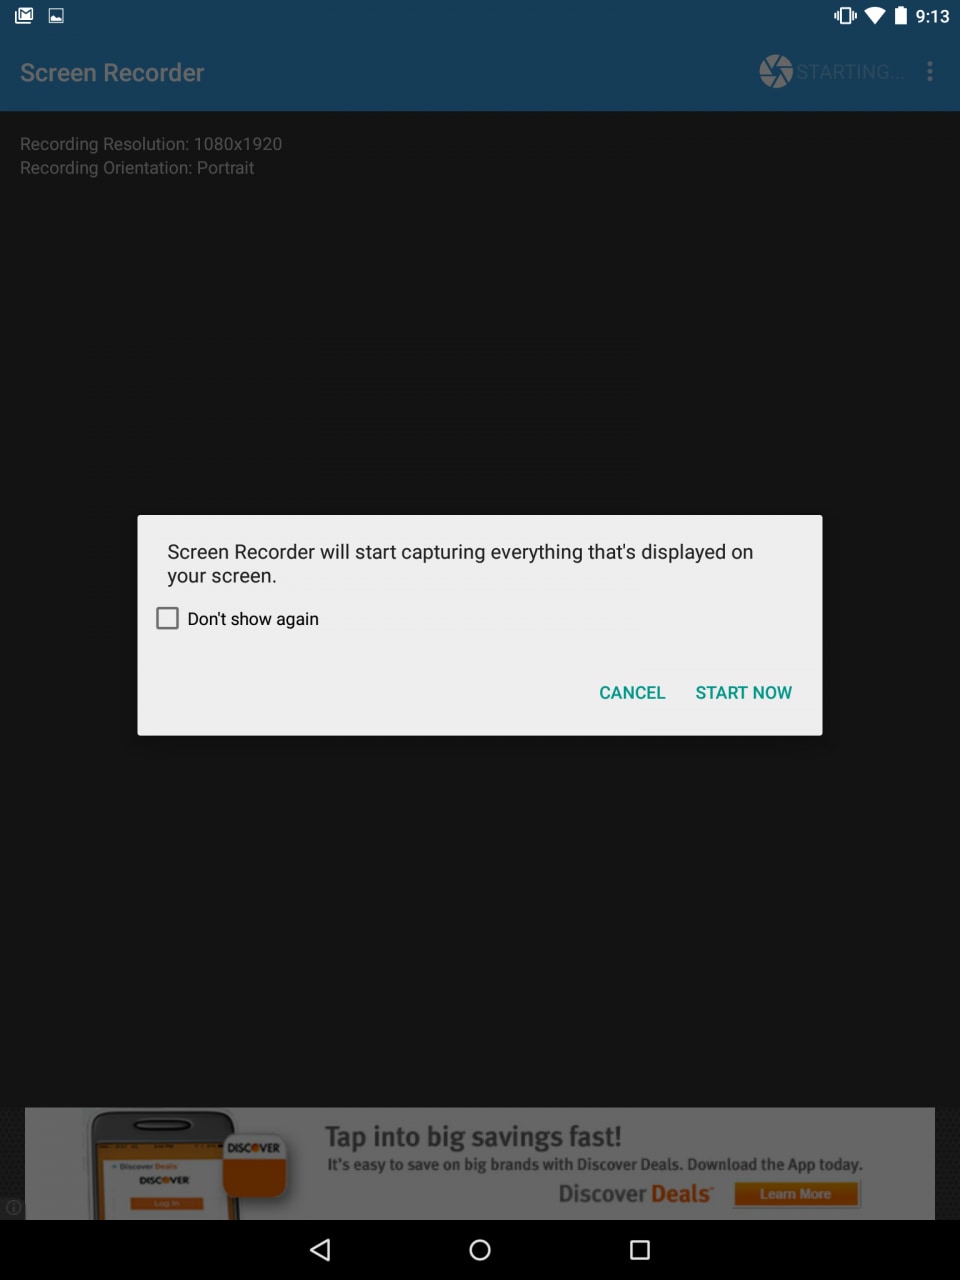 az screen recorder download android 4.4.2